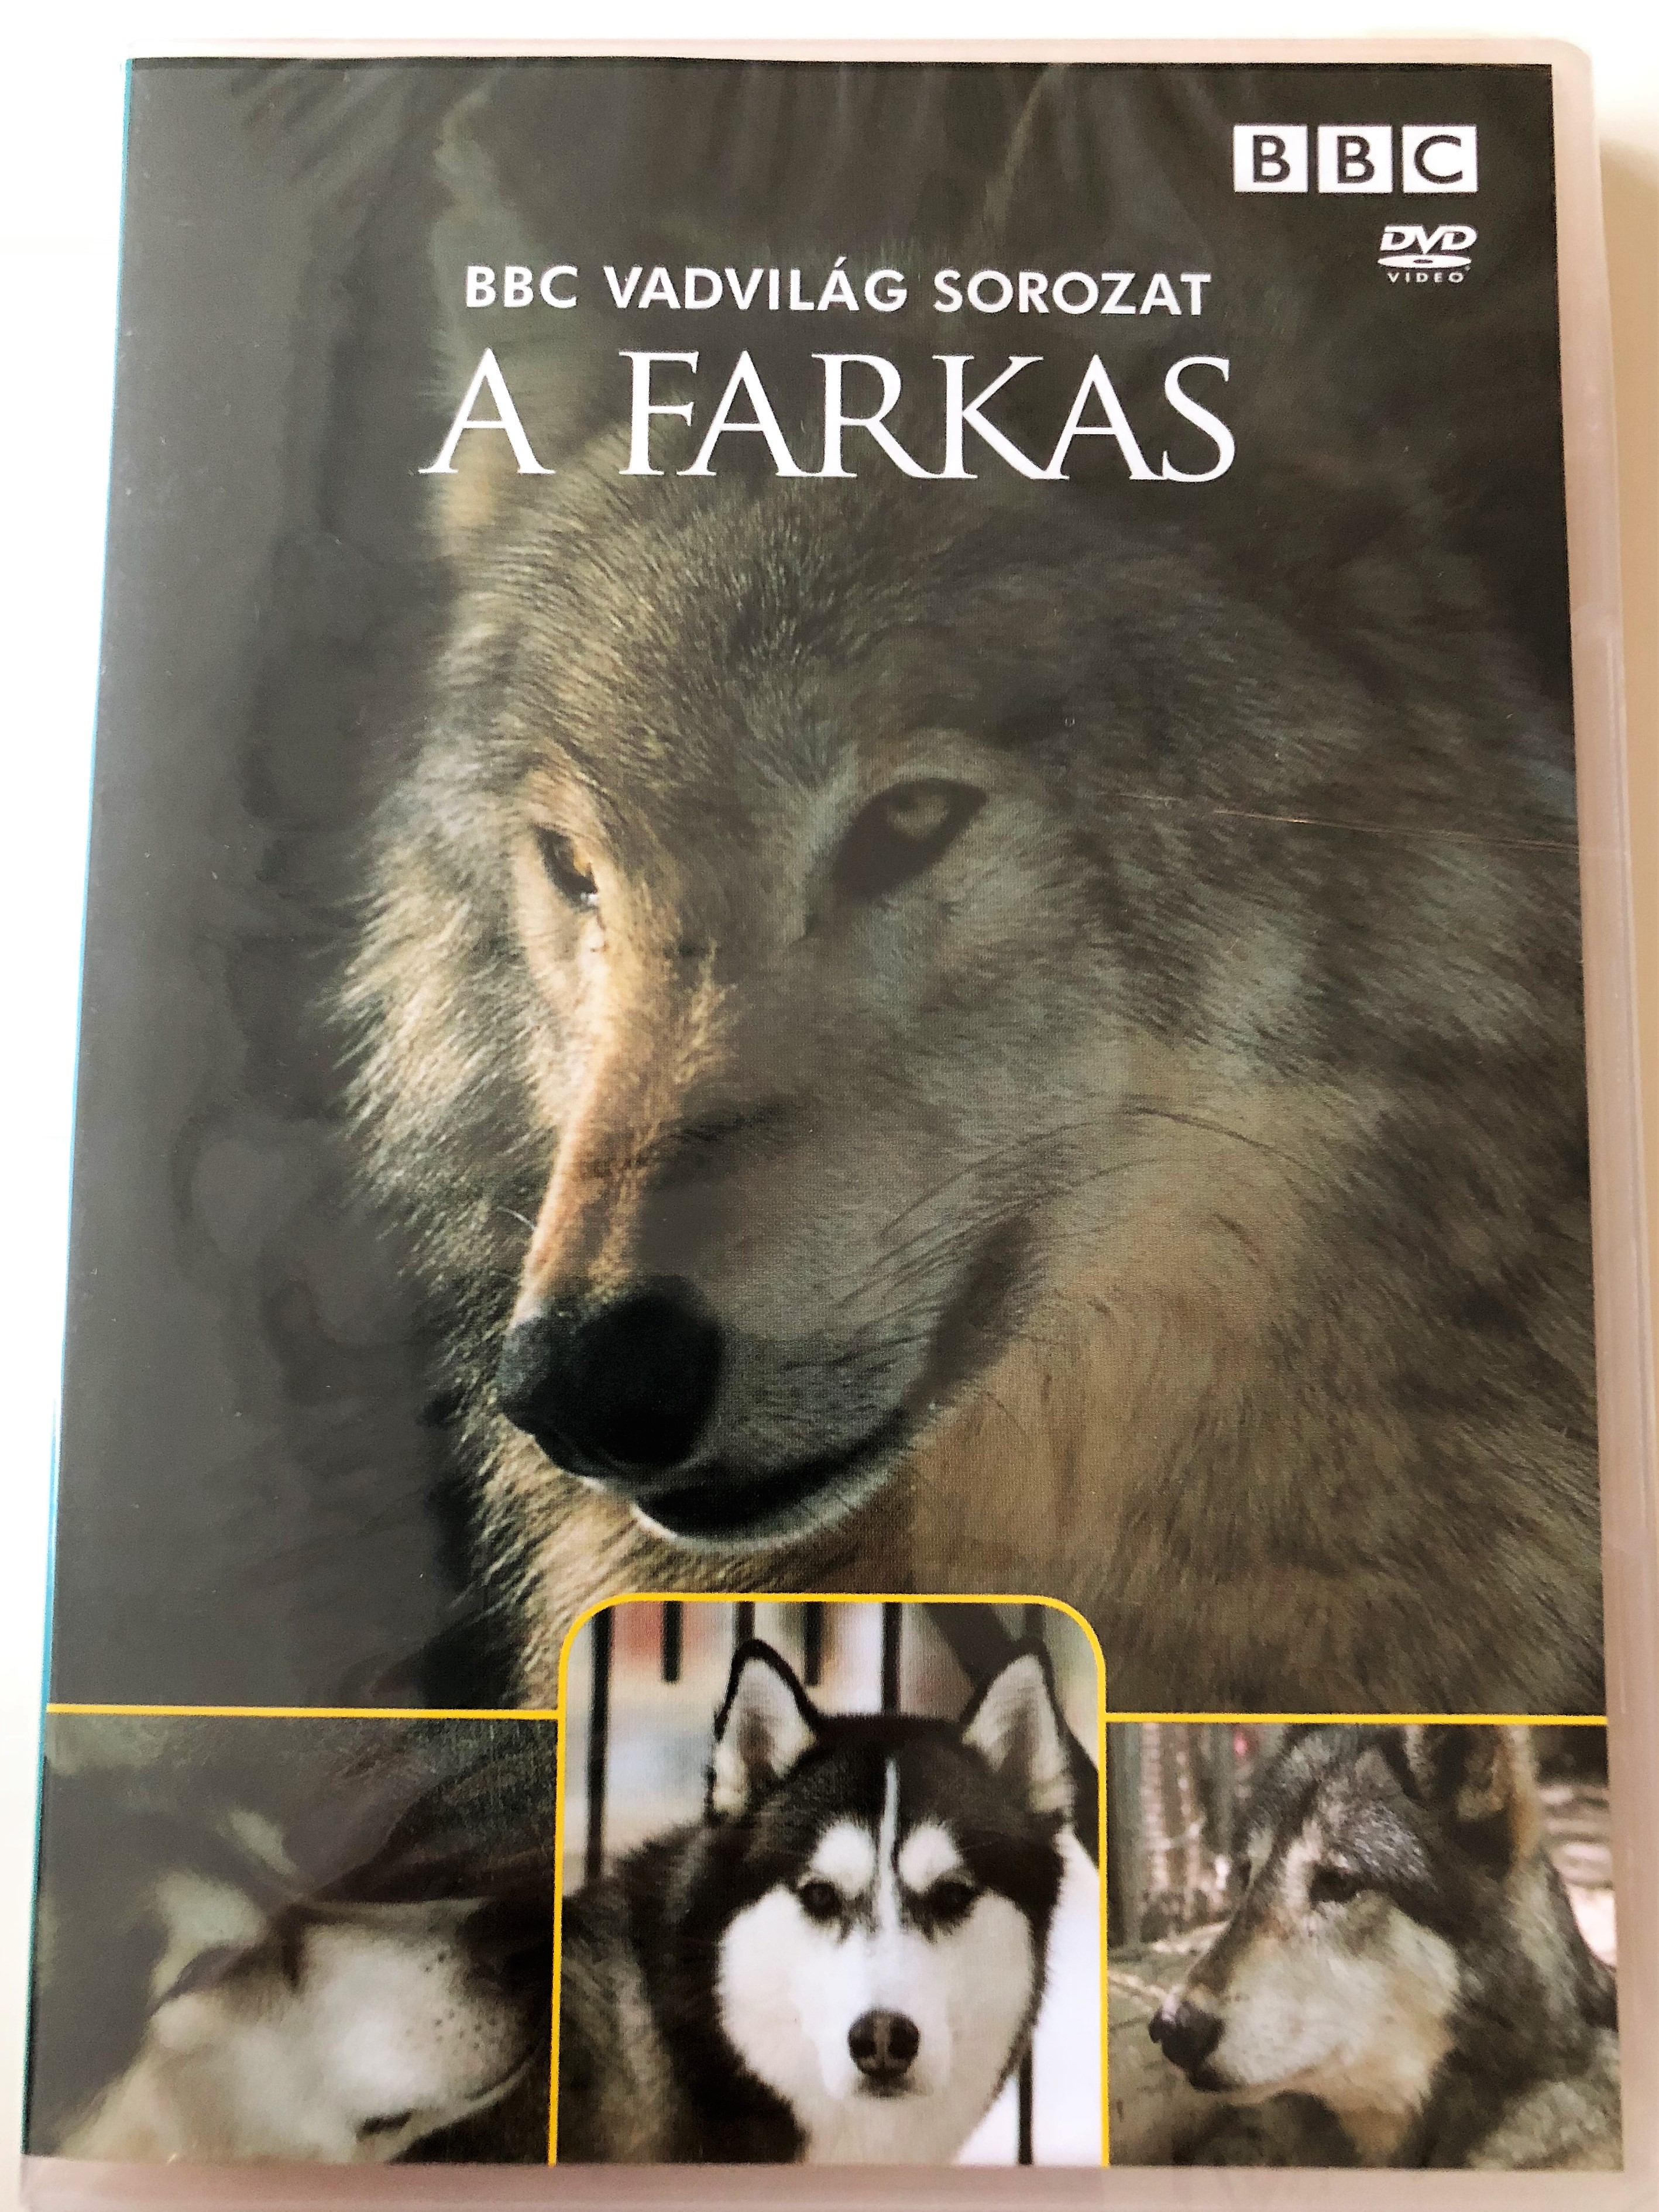 a-farkas-the-wolf-bbc-wildlife-series-narrated-by-sir-david-attenborough-hungarian-version-1-.jpg